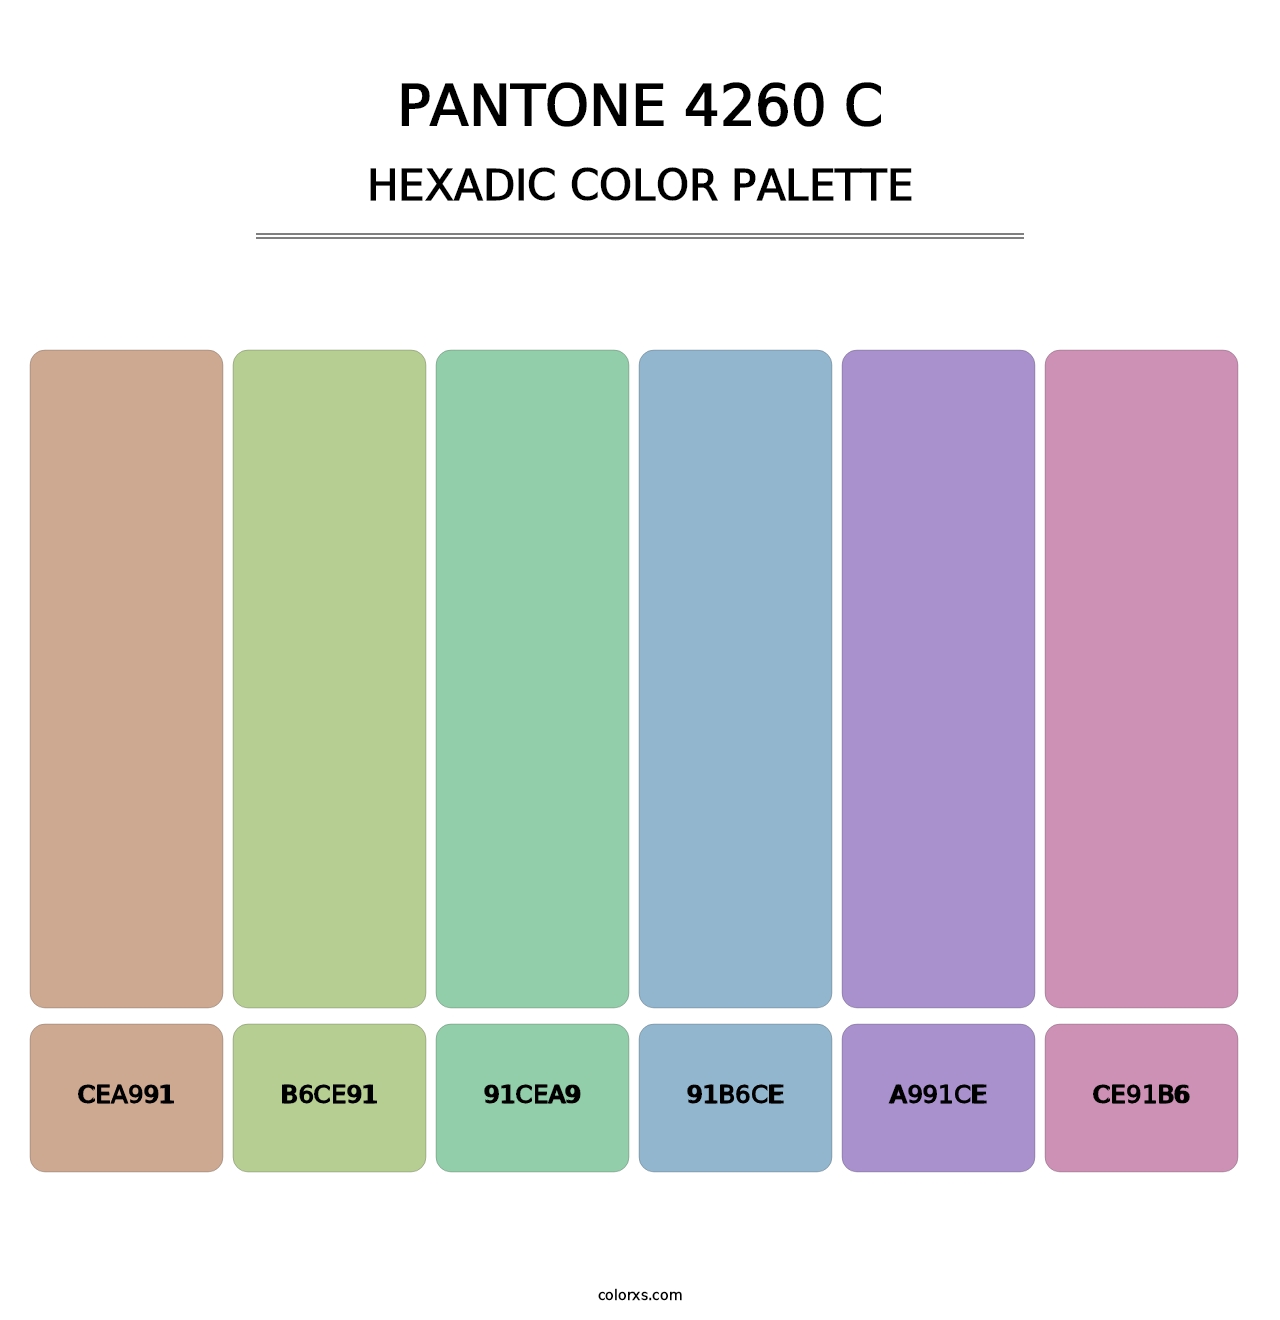 PANTONE 4260 C - Hexadic Color Palette